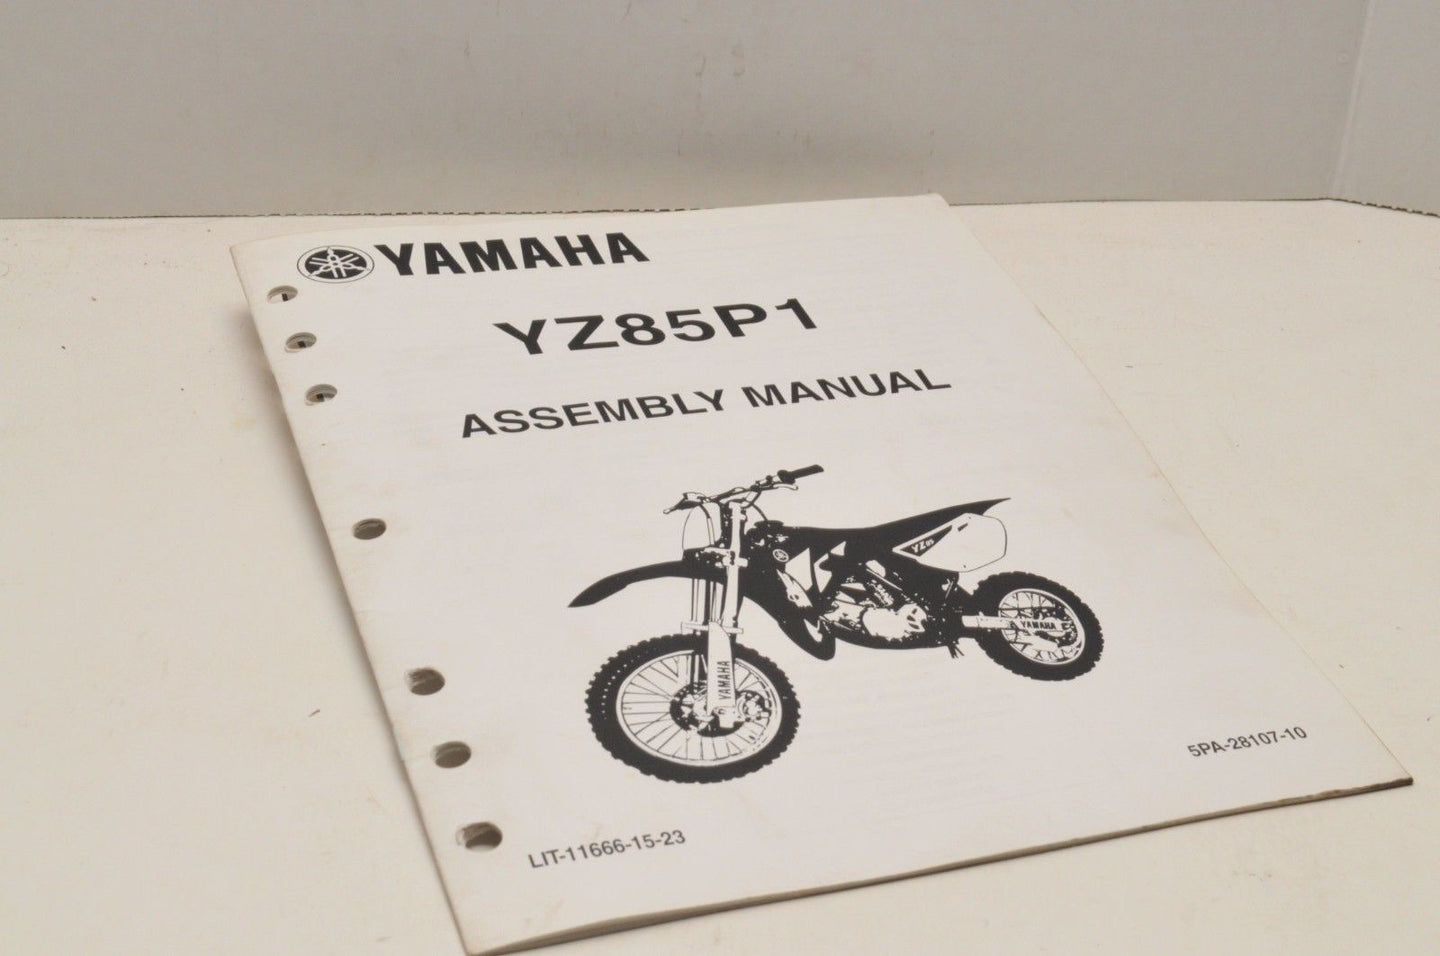 Genuine Yamaha FACTORY ASSEMBLY SETUP MANUAL YZ85P1 YZ85 2002 LIT-11666-15-23